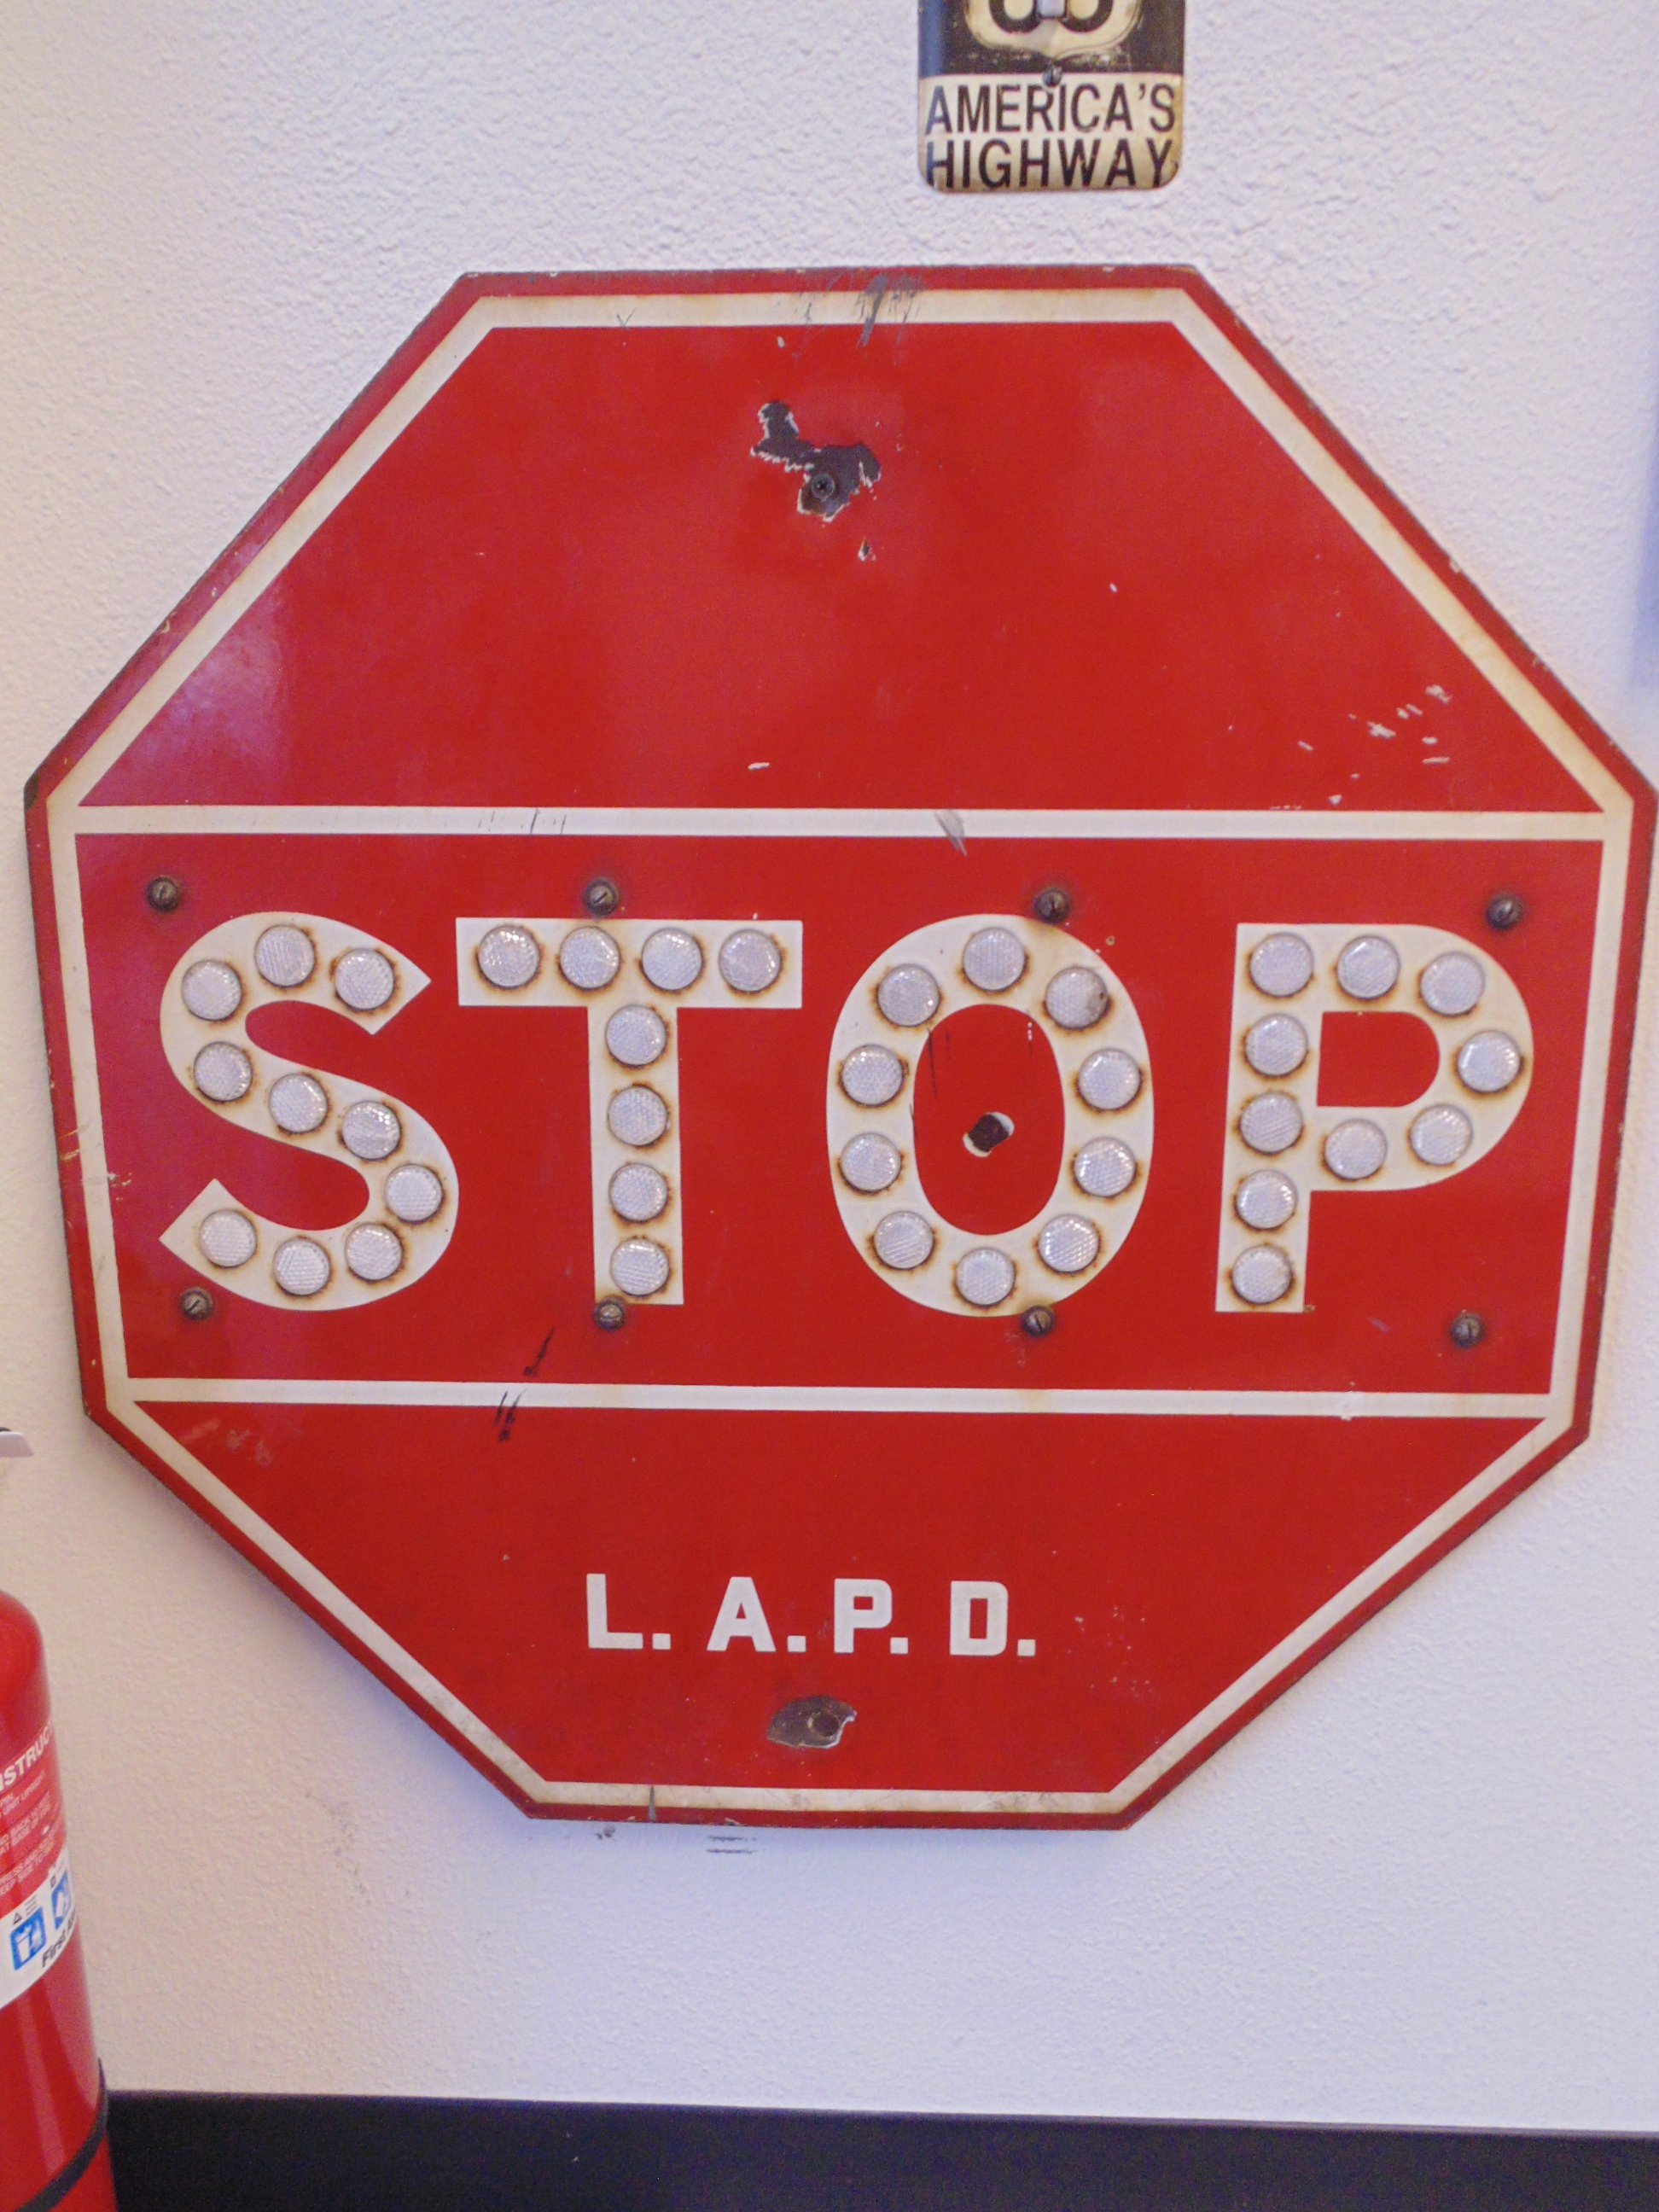 L.A.P.D. Stop Sign